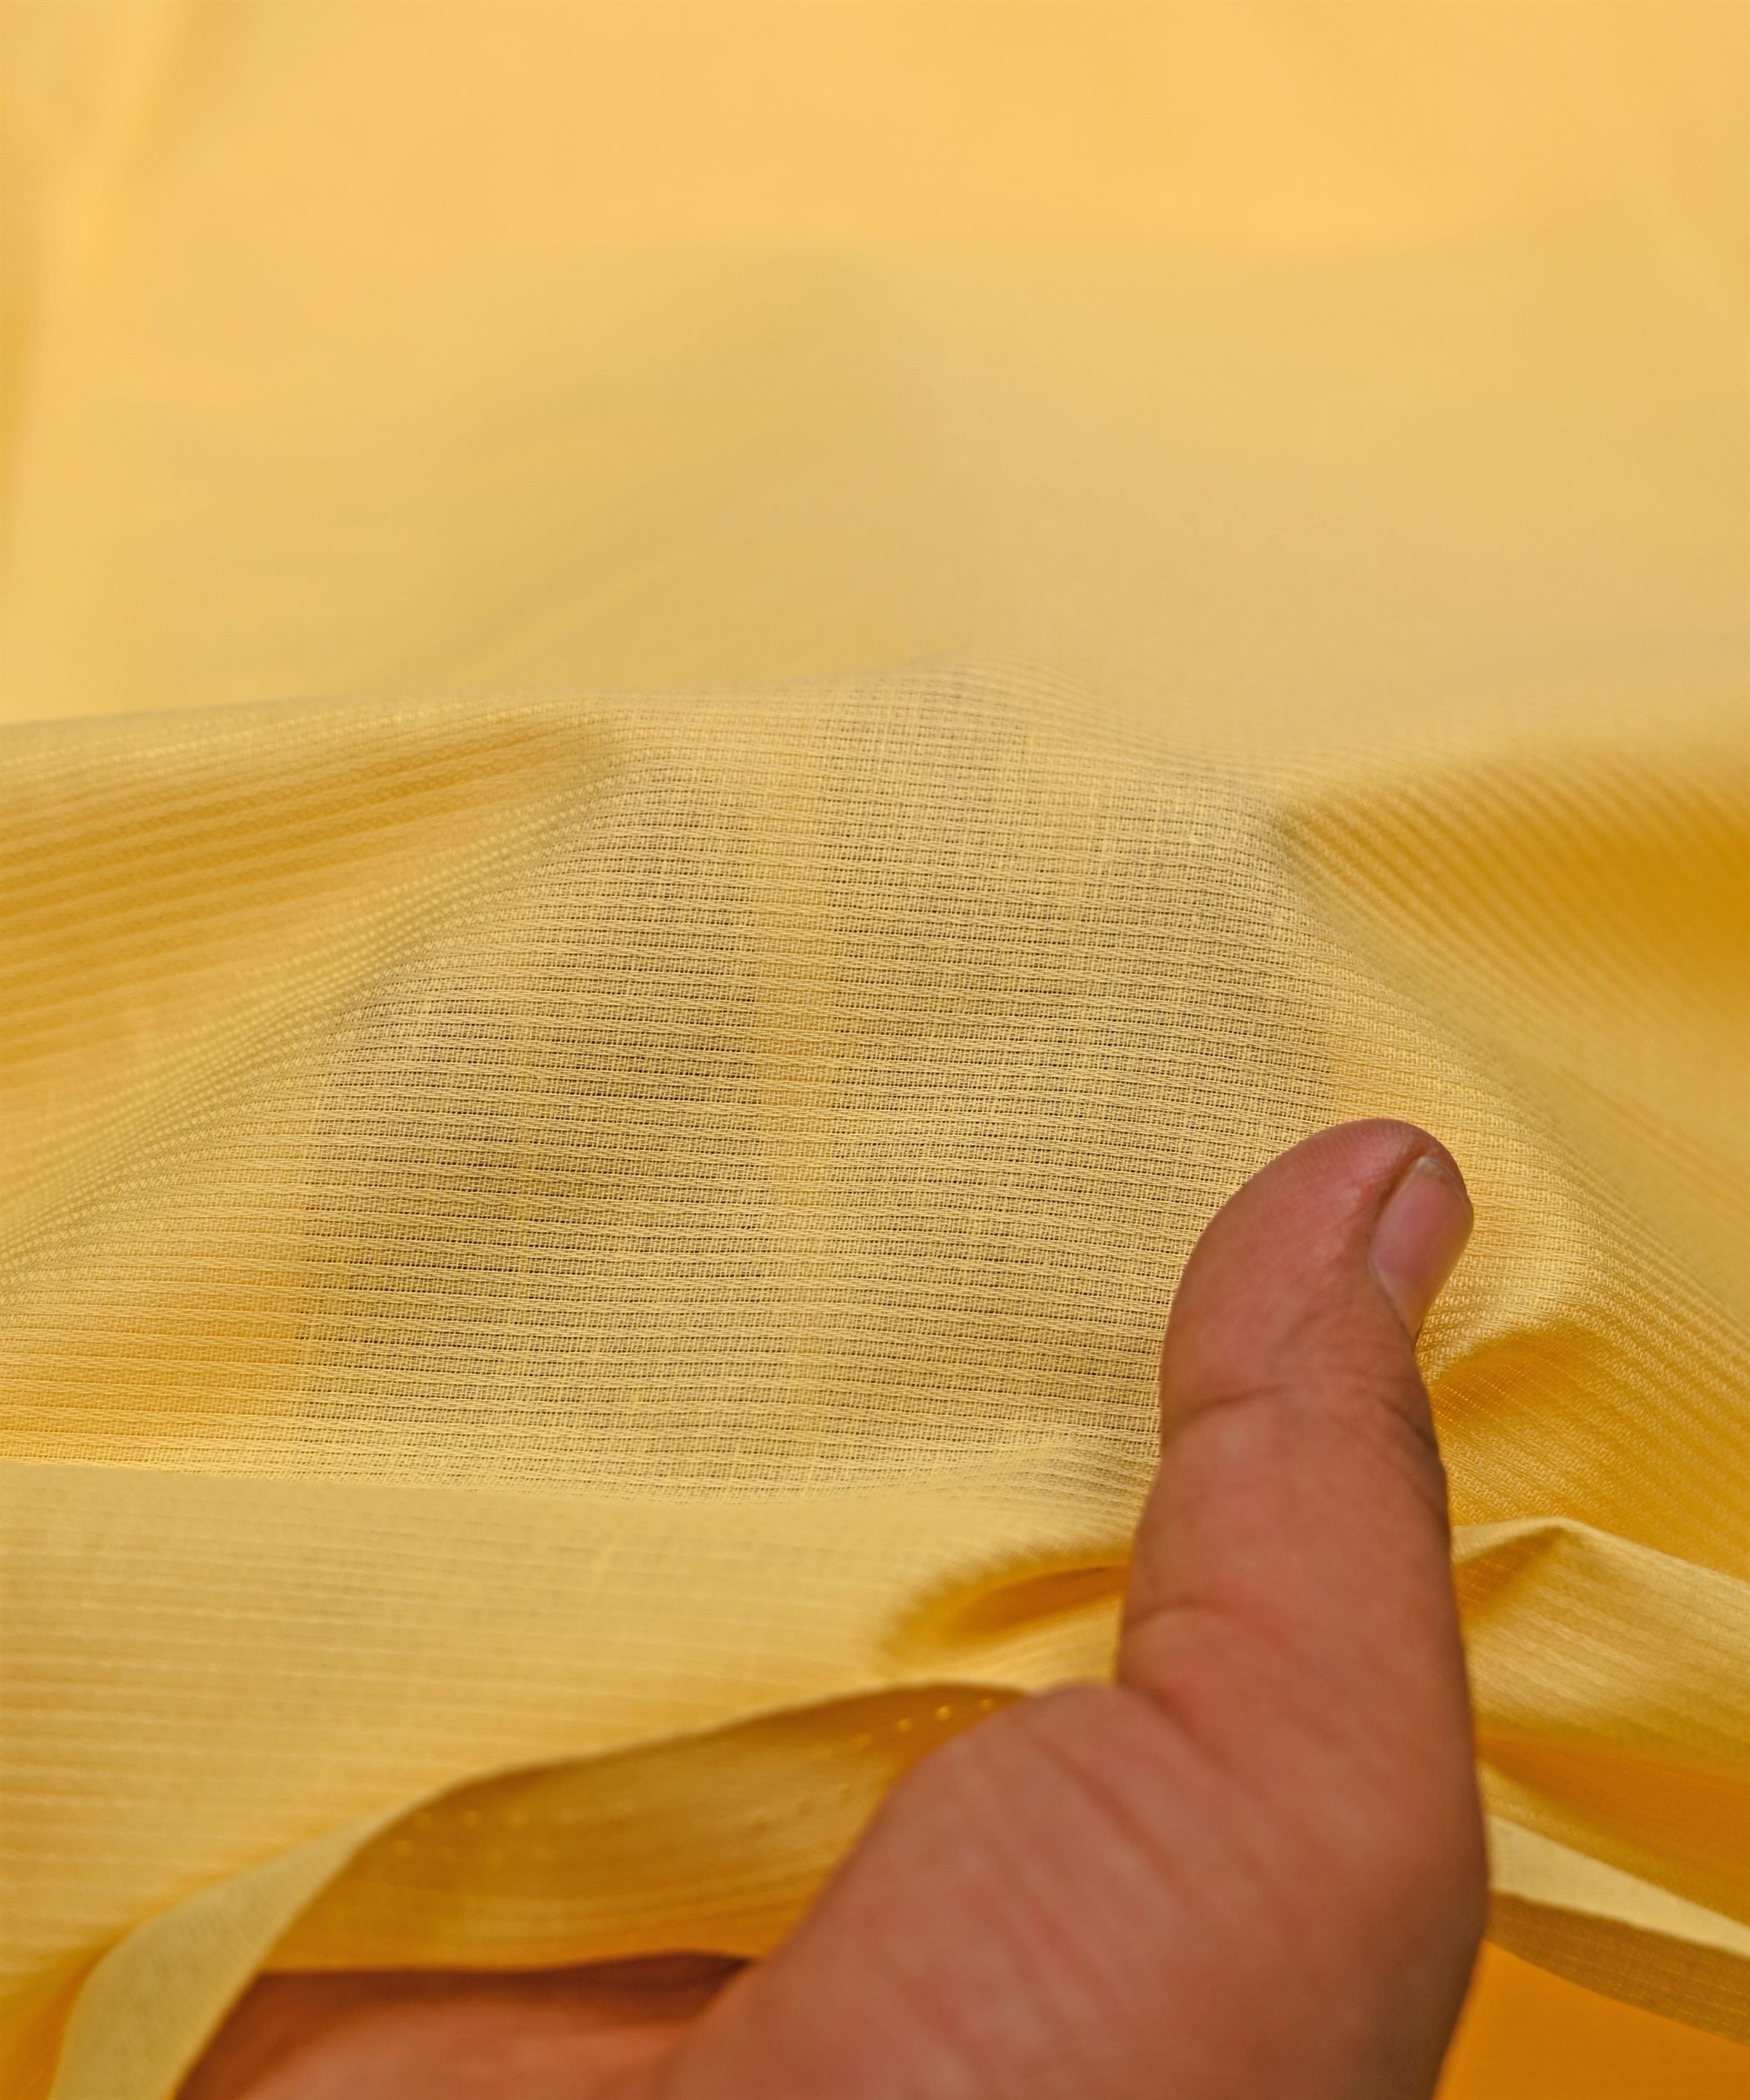 Yellow Plain Dyed Striped Cotton Fabric